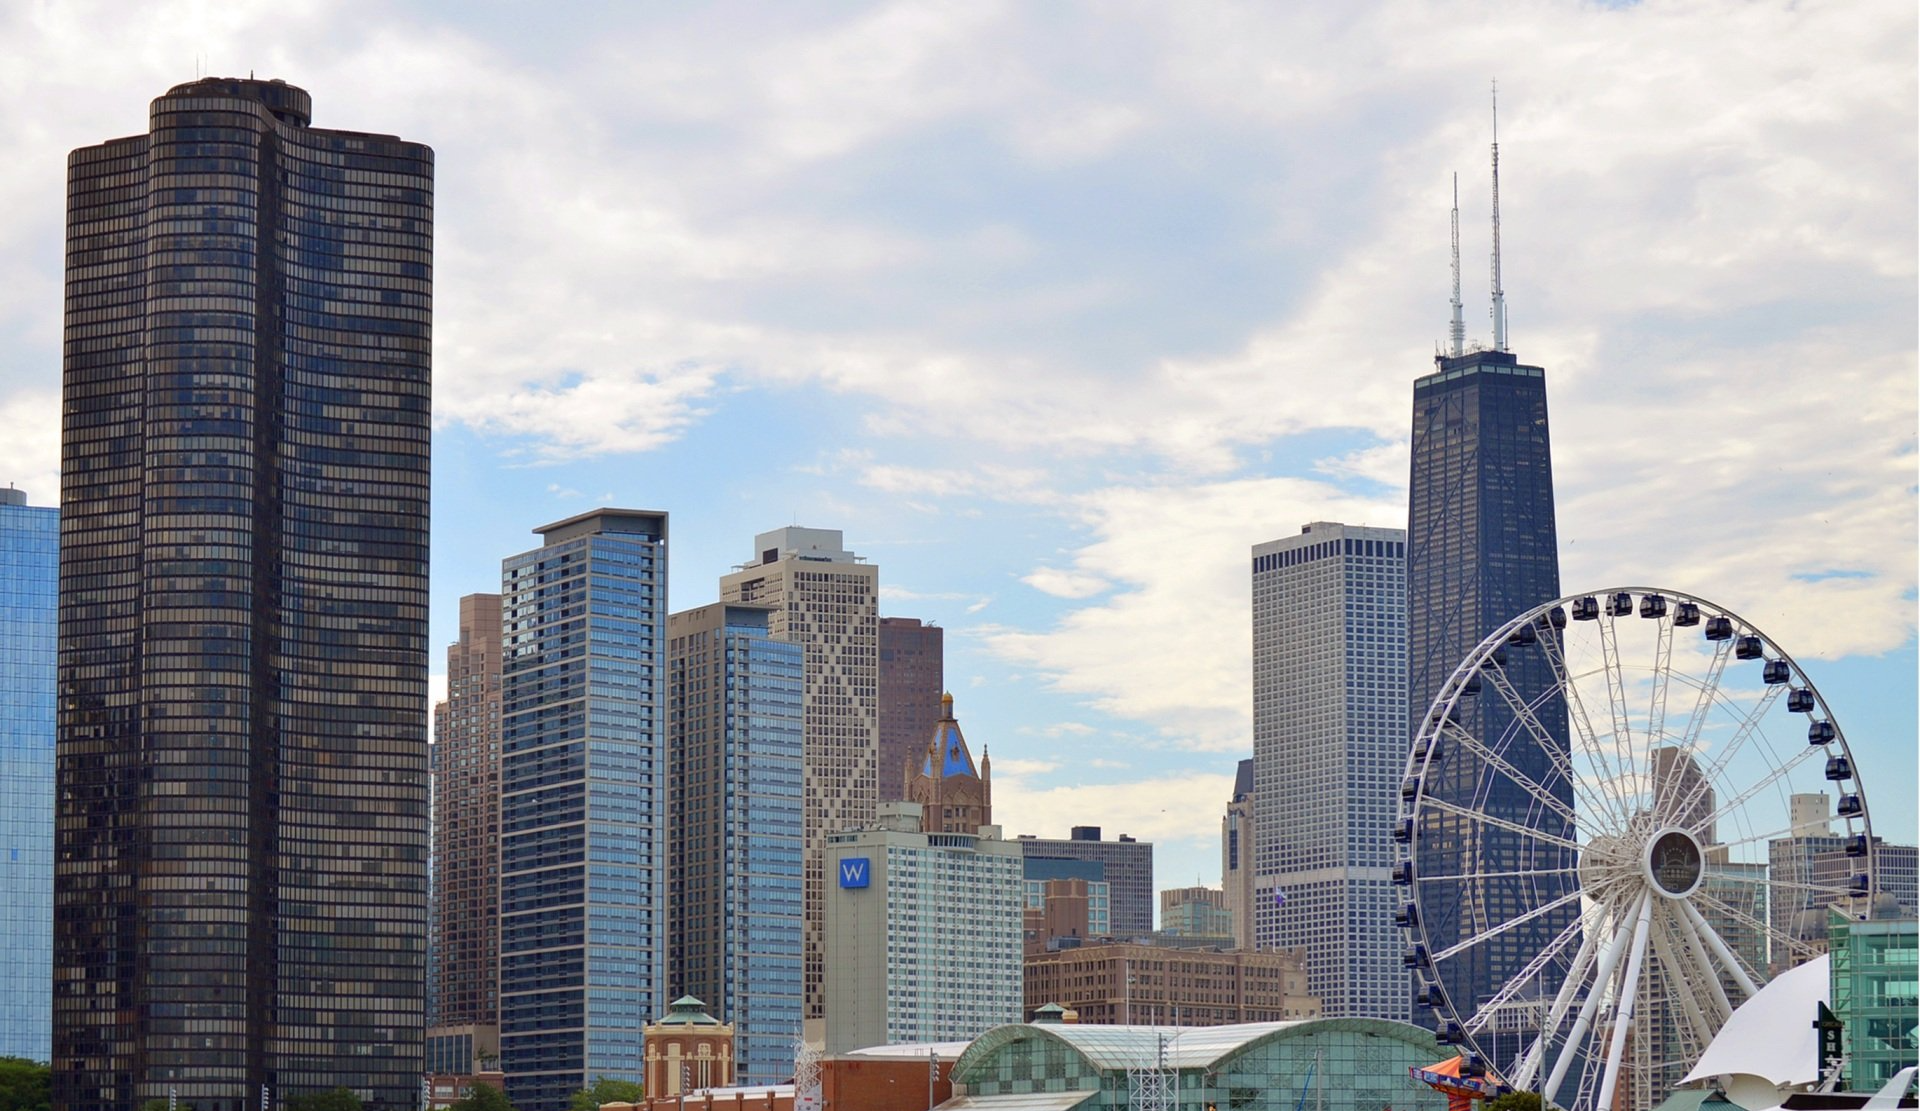 Skyline Photo of Chicago